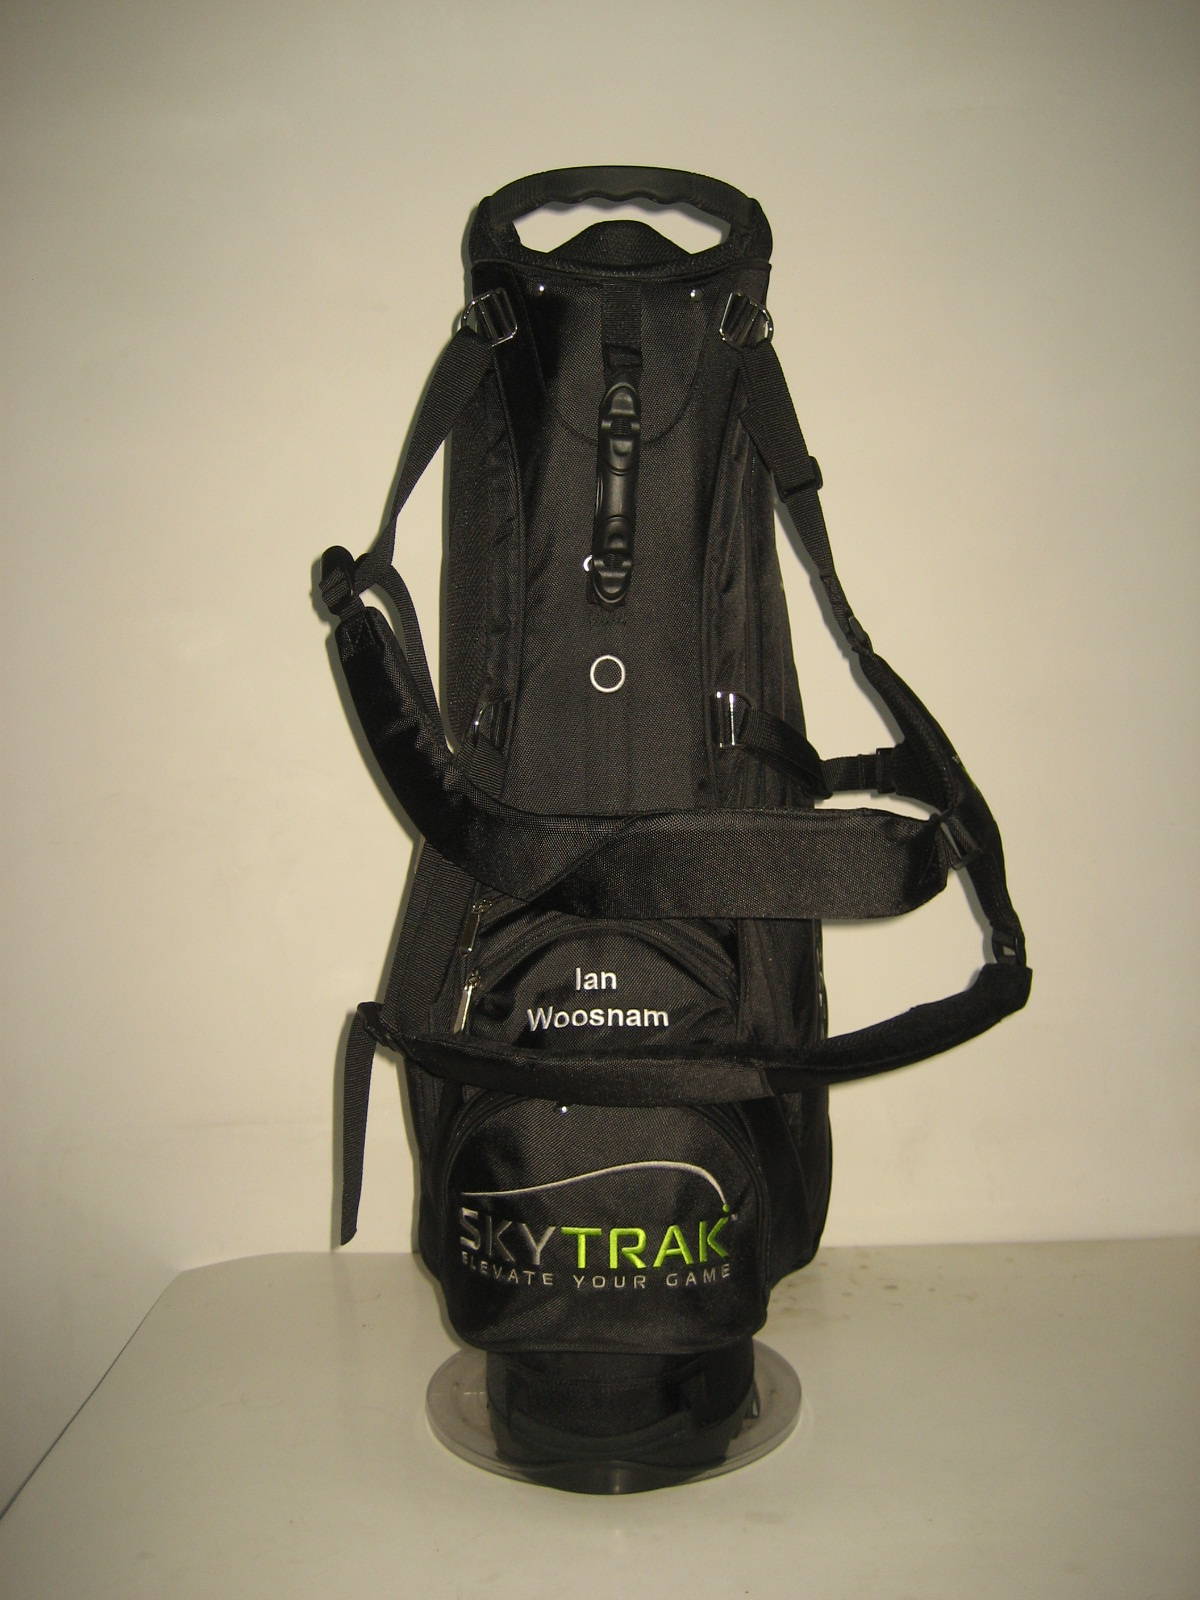 Customised football club golf bags by Golf Custom Bags 209